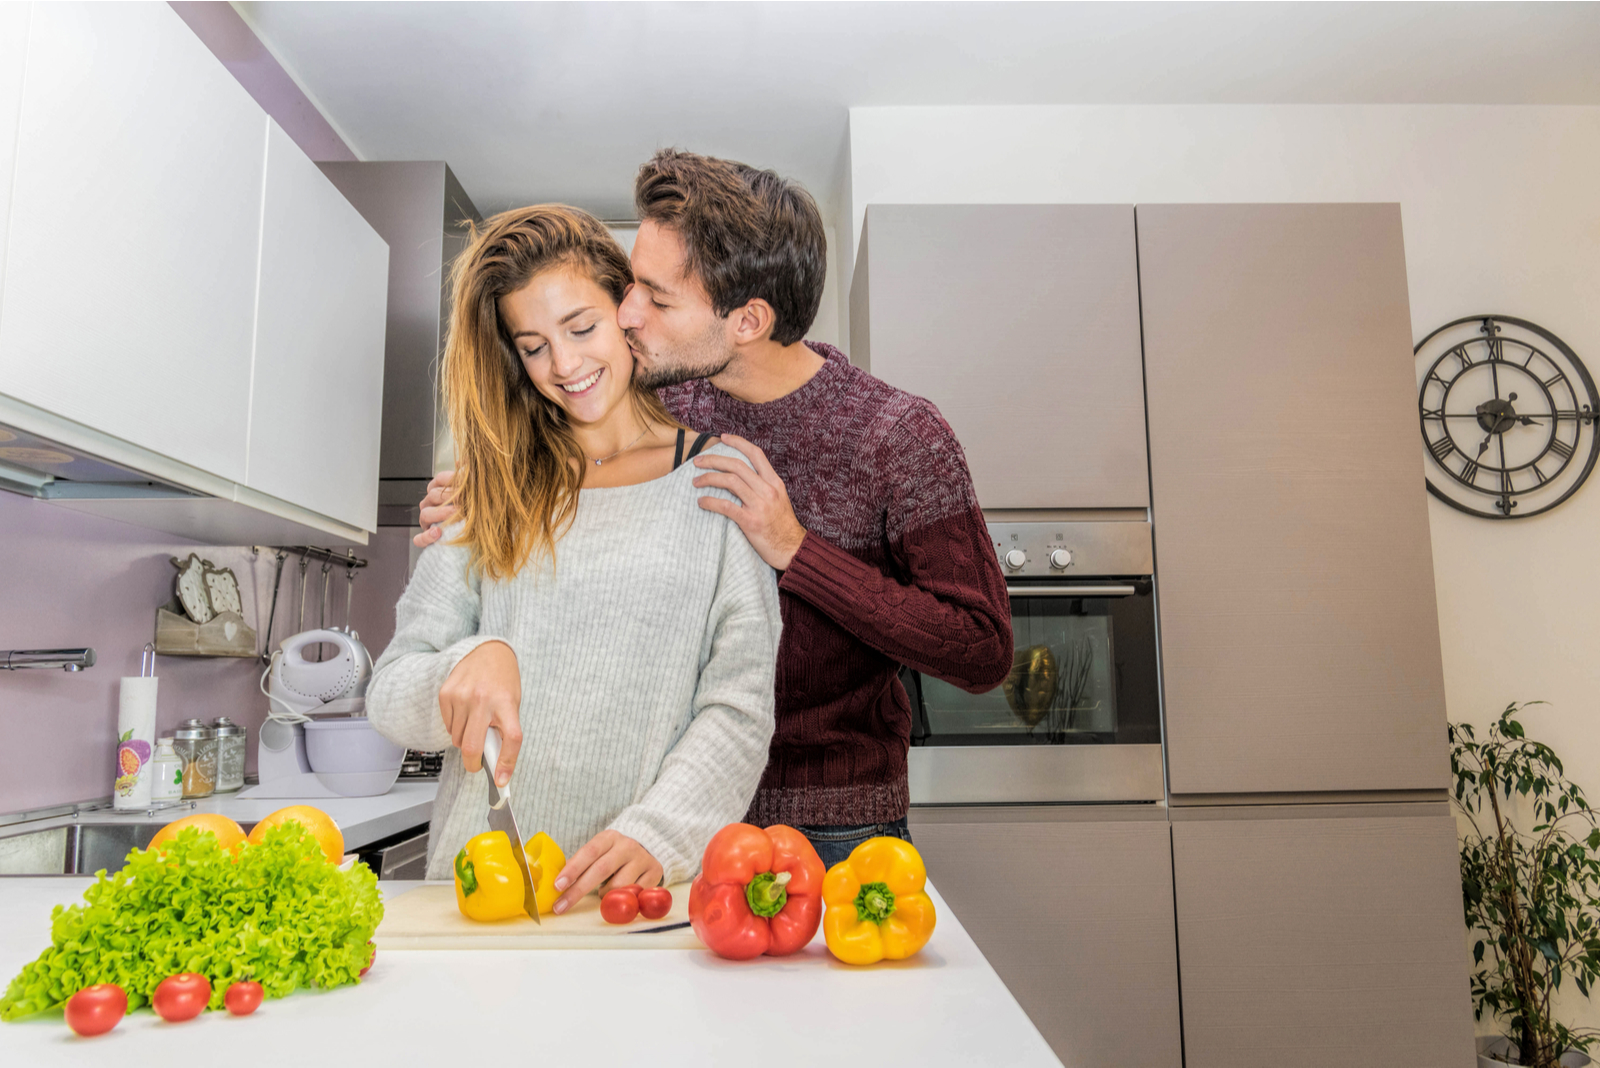 donna sorridente taglia le verdure in cucina un uomo la bacia sulla guancia